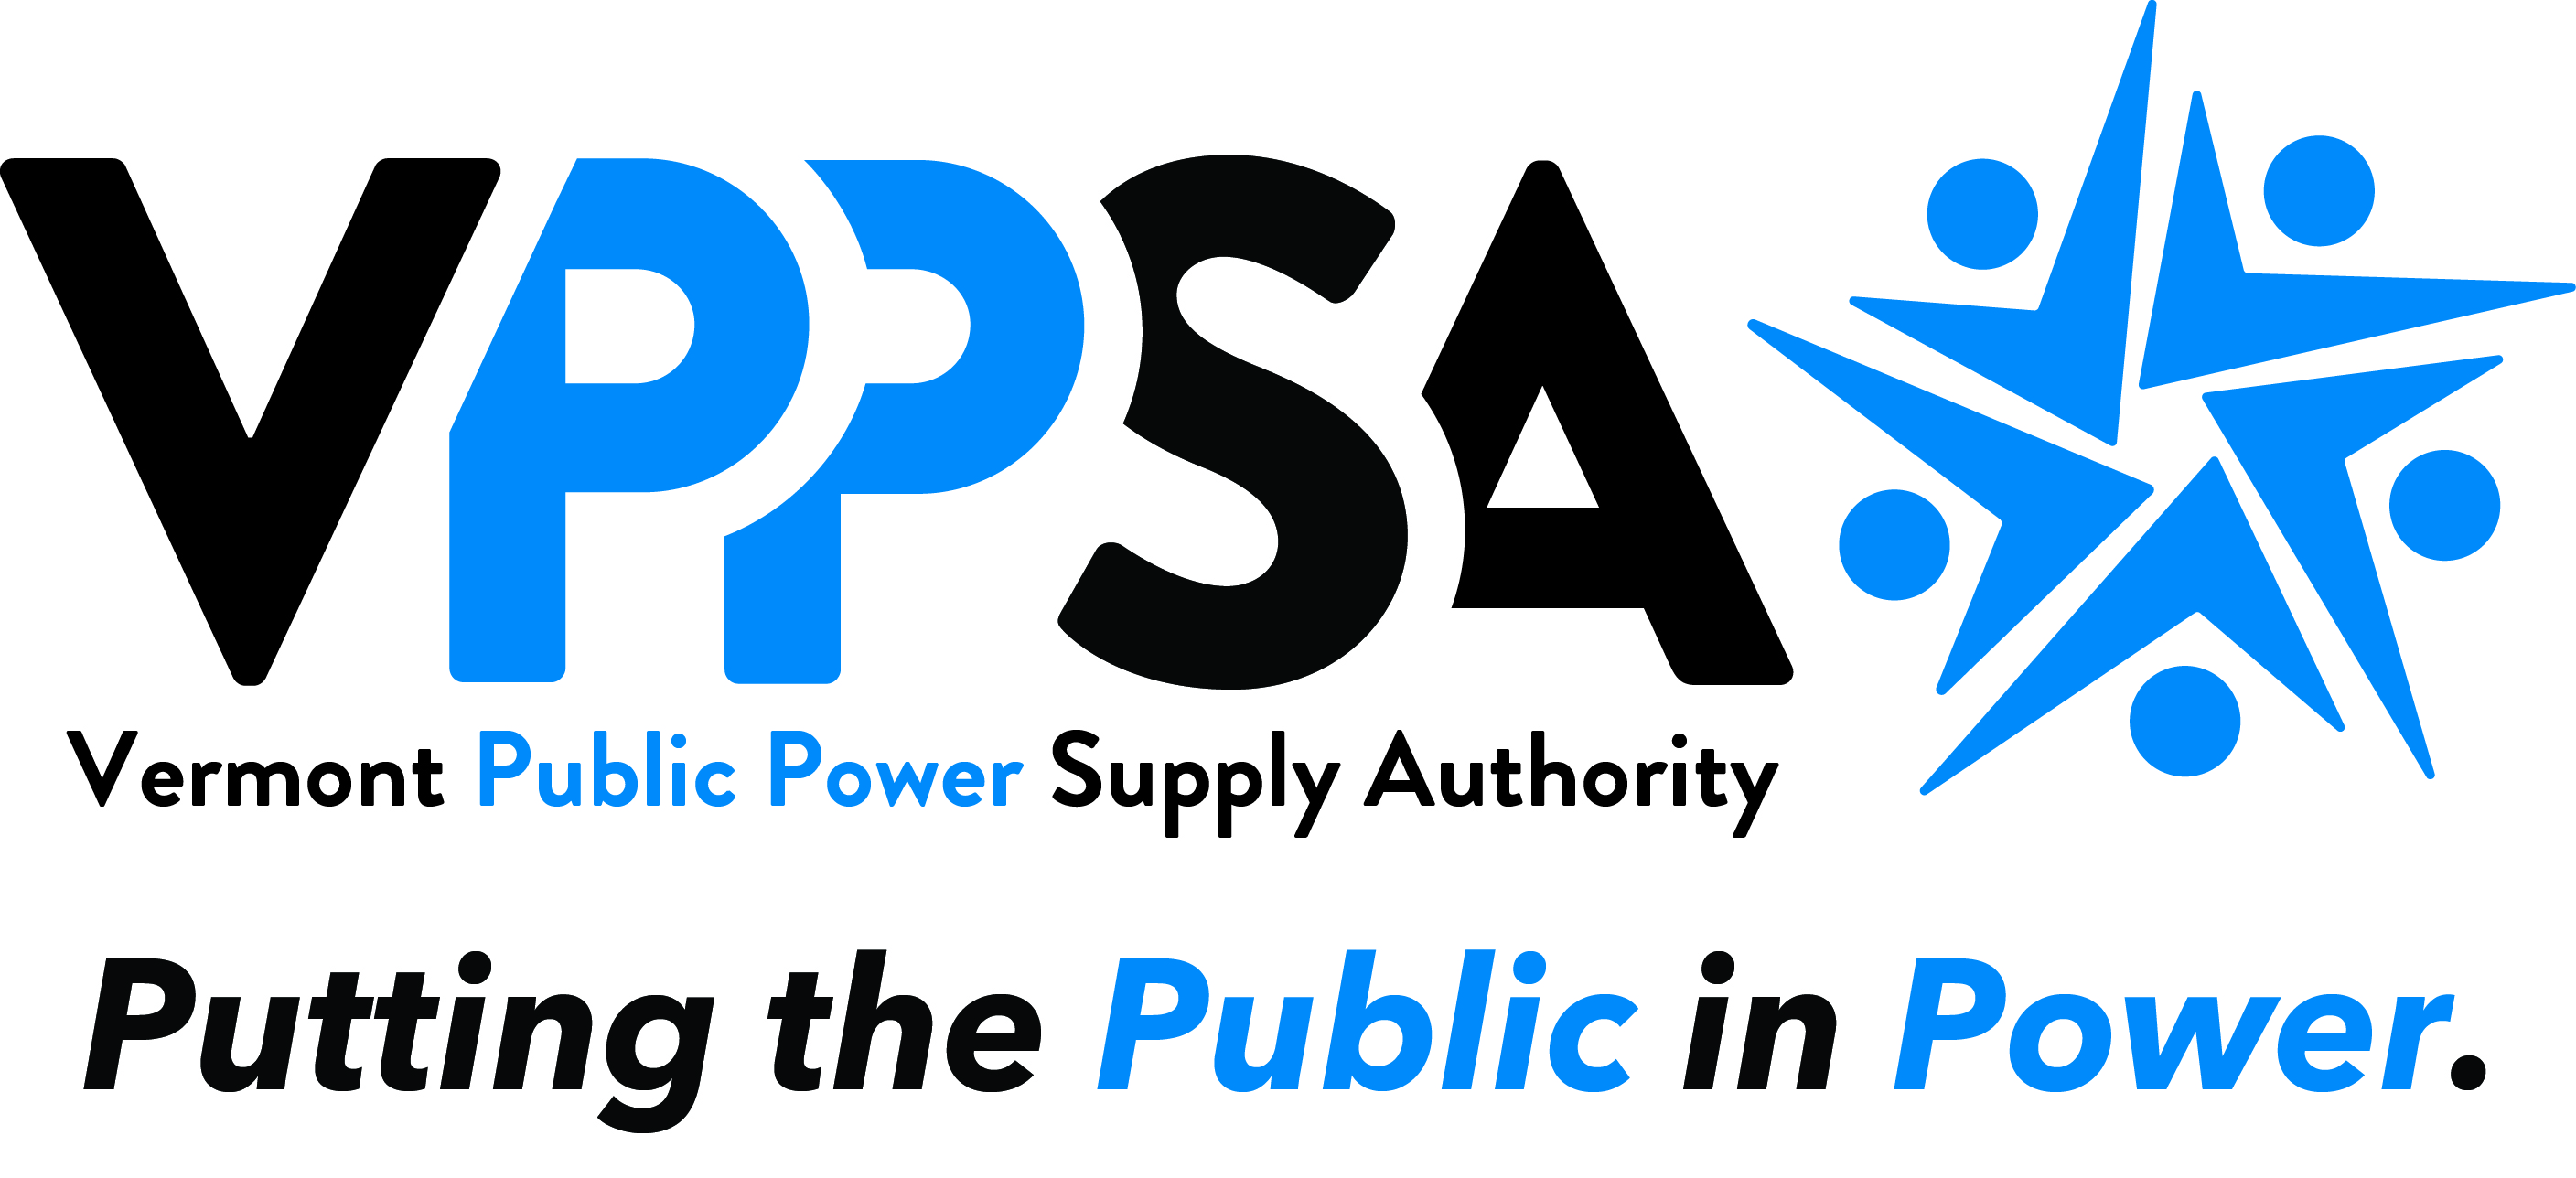 Vermont Public Power Supply Authority Logo